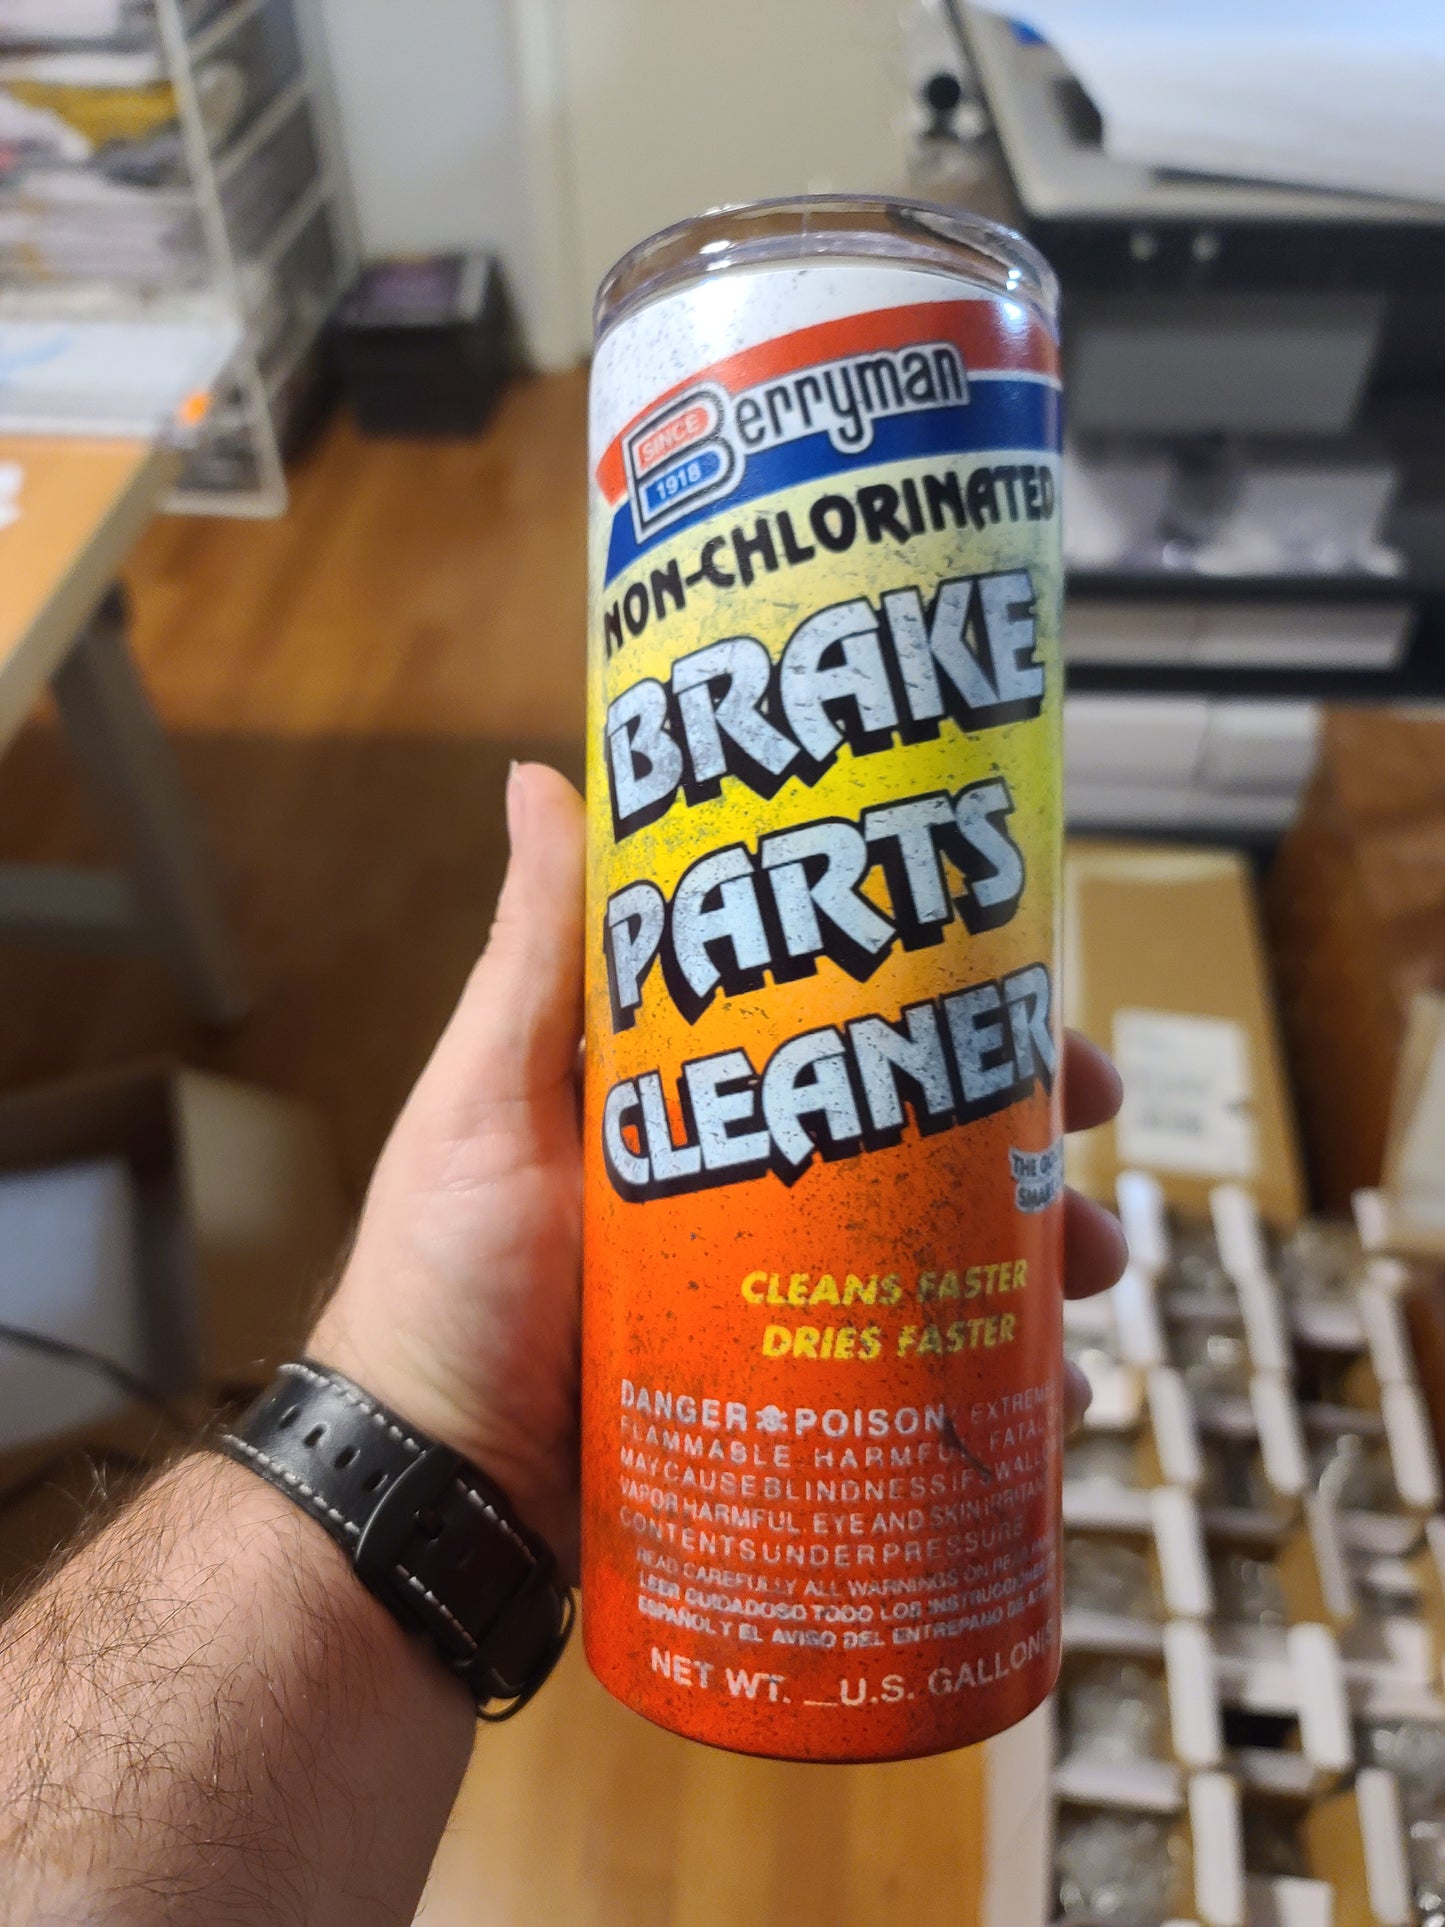 Berryman Brake Parts Cleaner